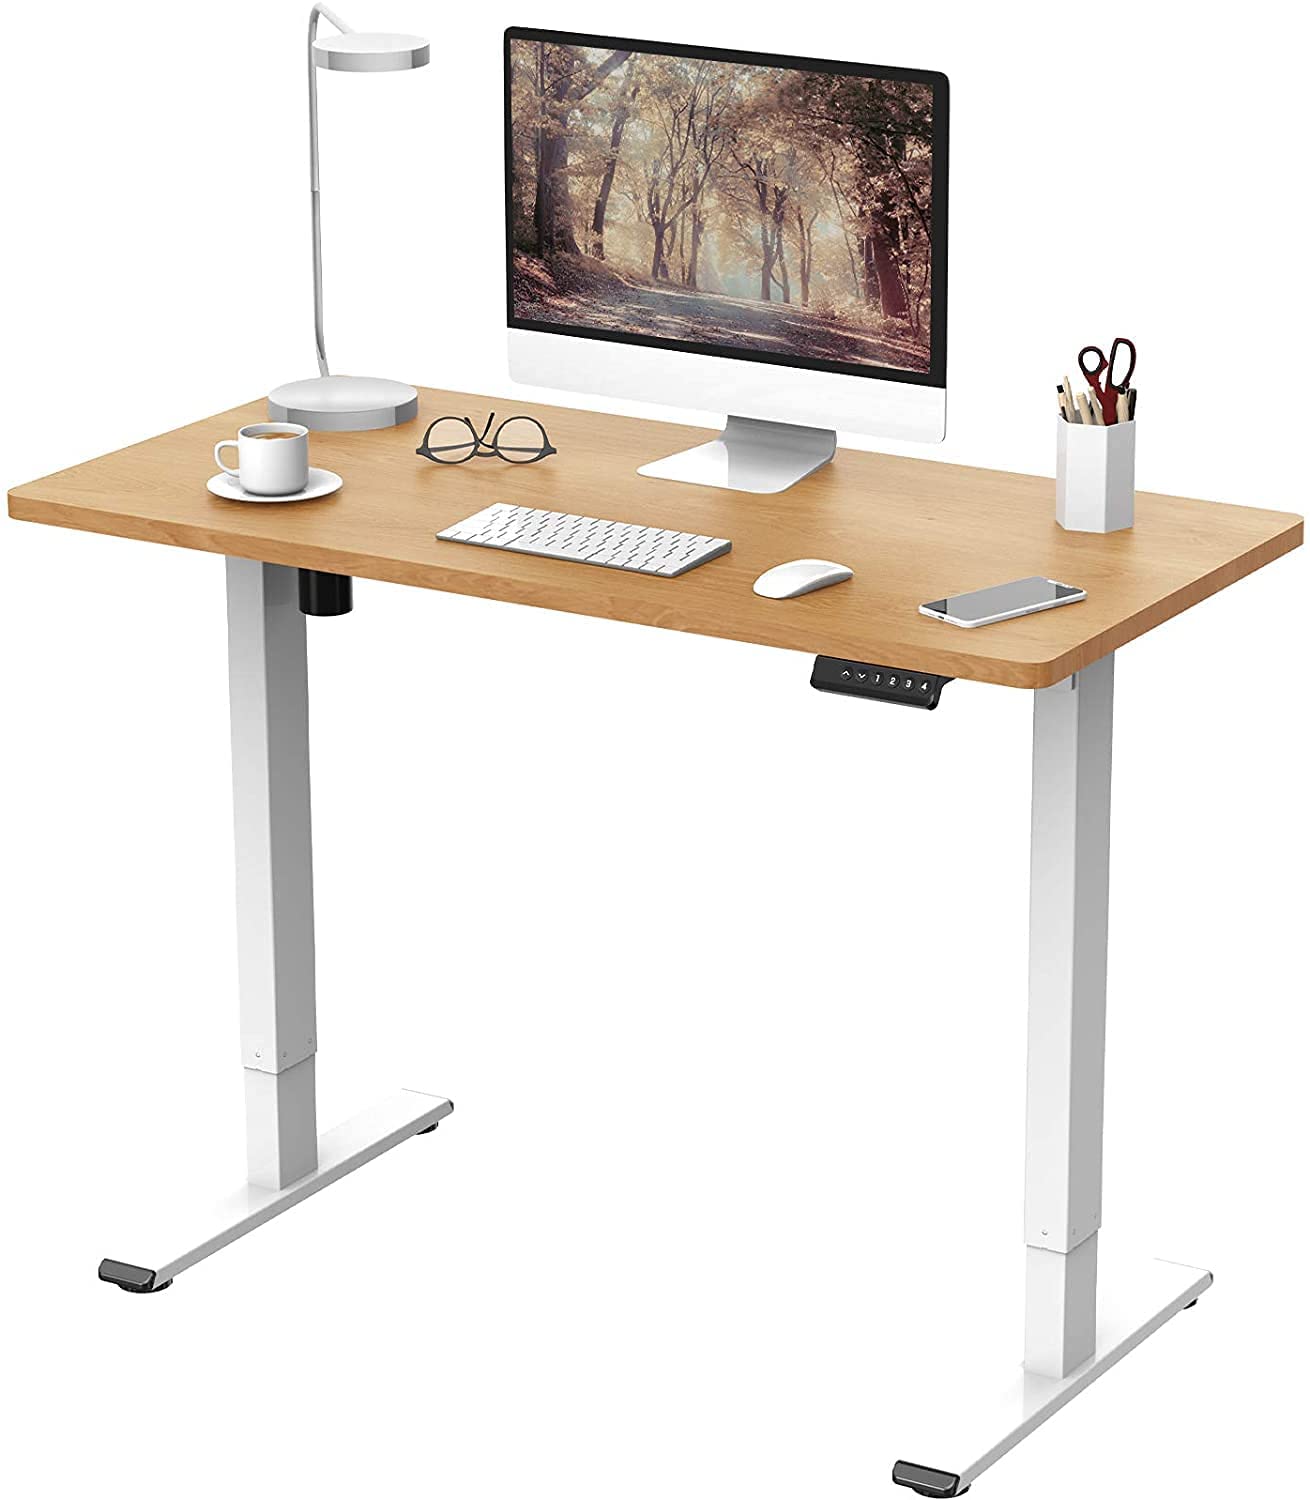 Flexispot electric sit-stand desk